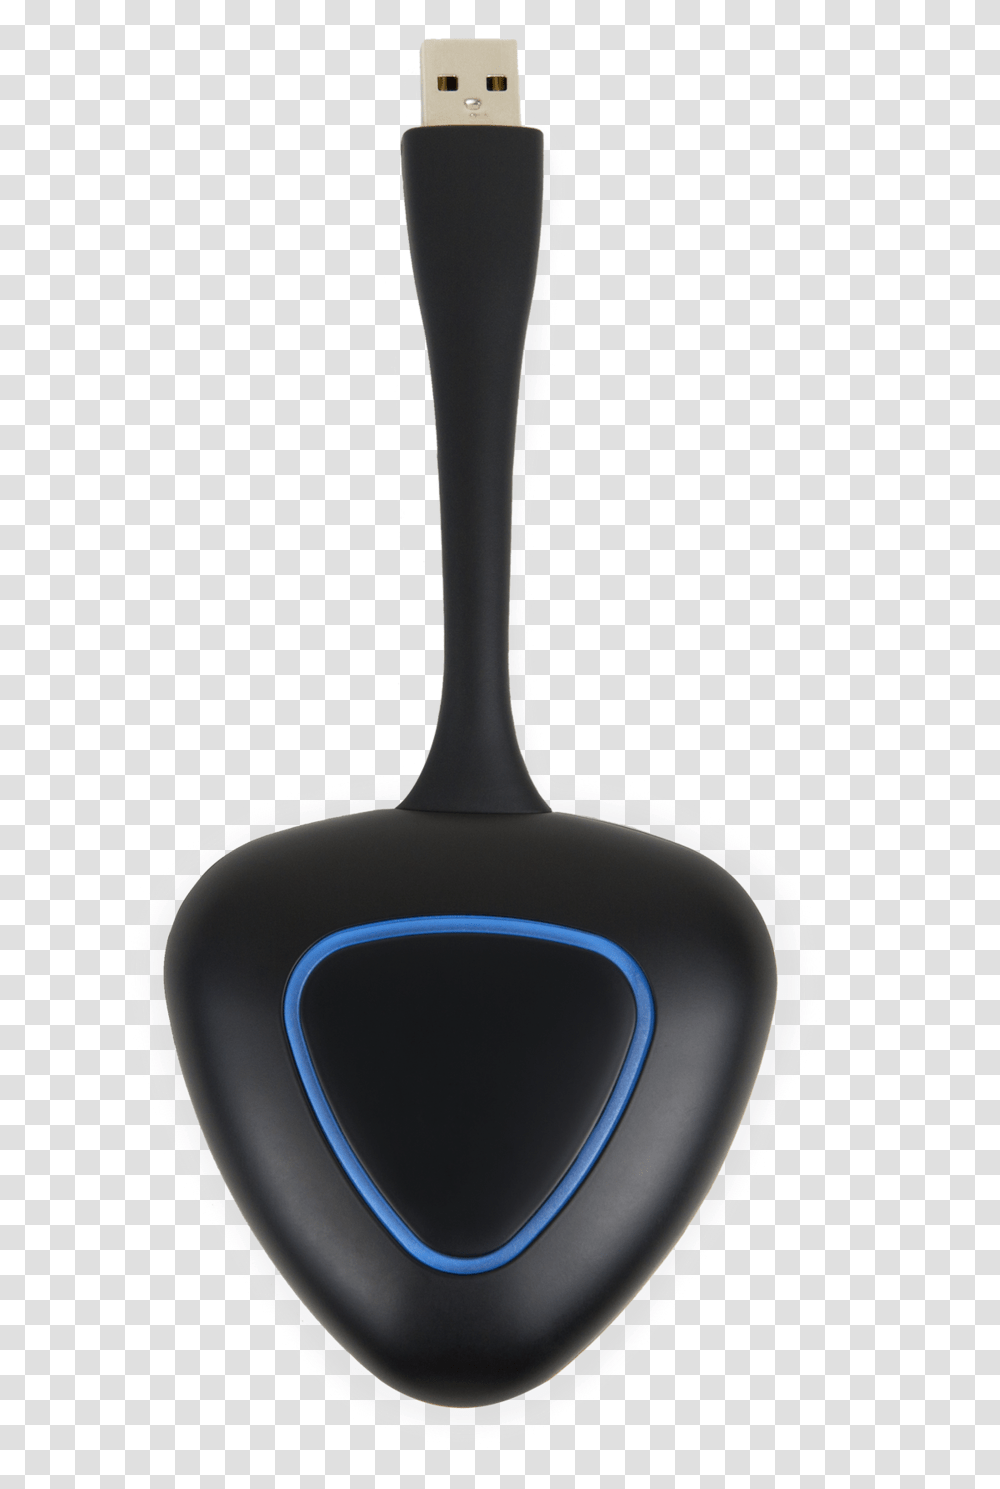 Sbutton Screenshare Button - Loft Illustration, Electronics, Spoon, Cutlery, Headphones Transparent Png